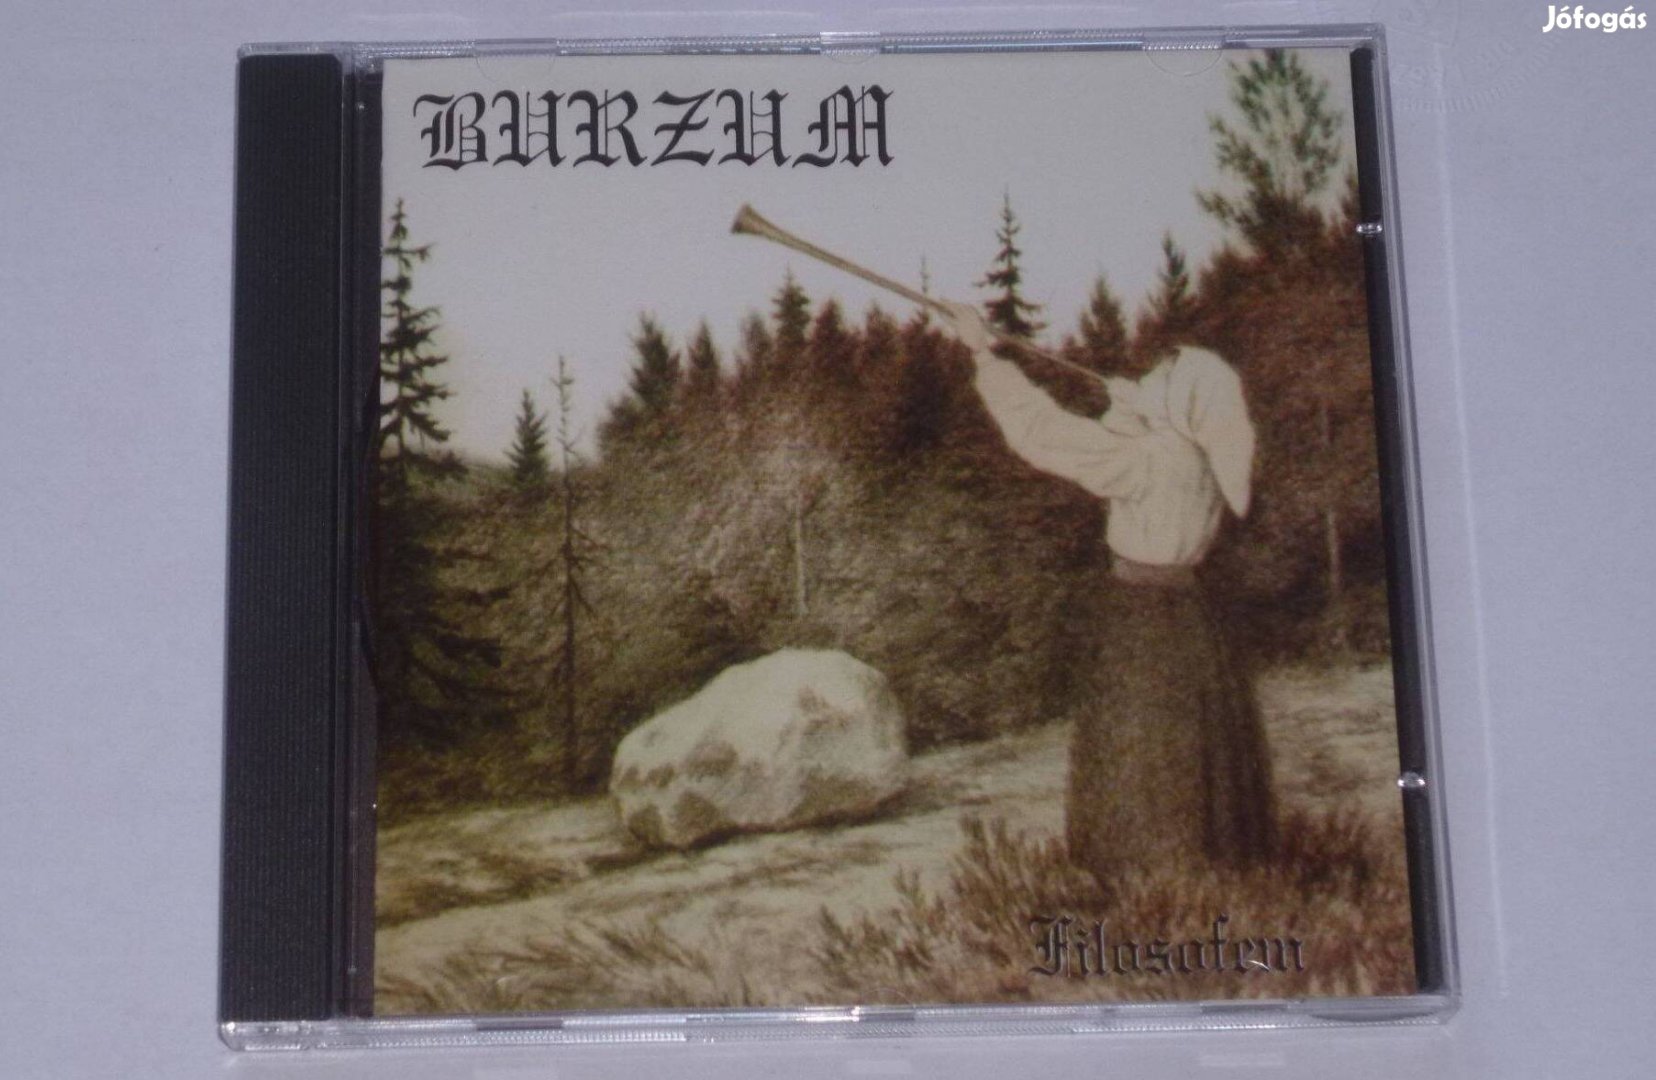 Burzum - Filosofem CD